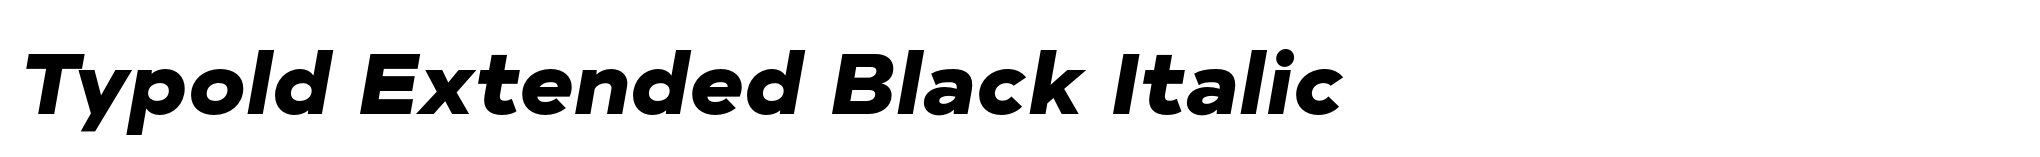 Typold Extended Black Italic image